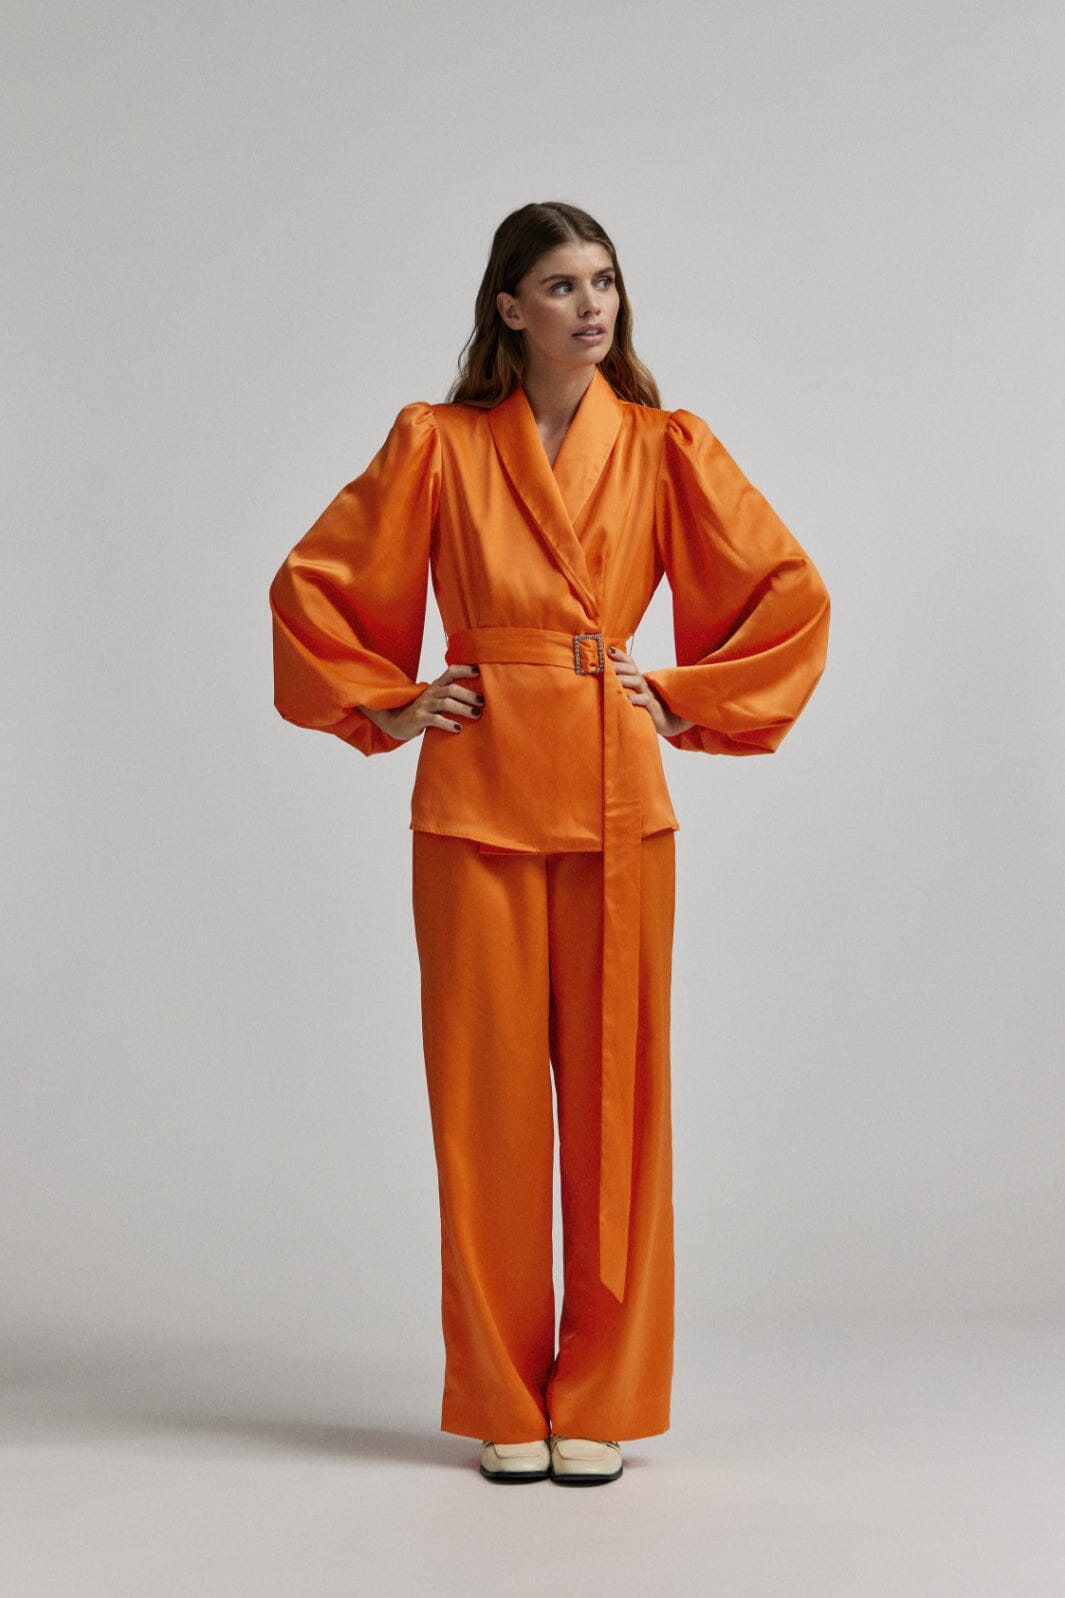 Y.A.S - Yaslilian Tailored Pants - Celosia Orange Bukser 